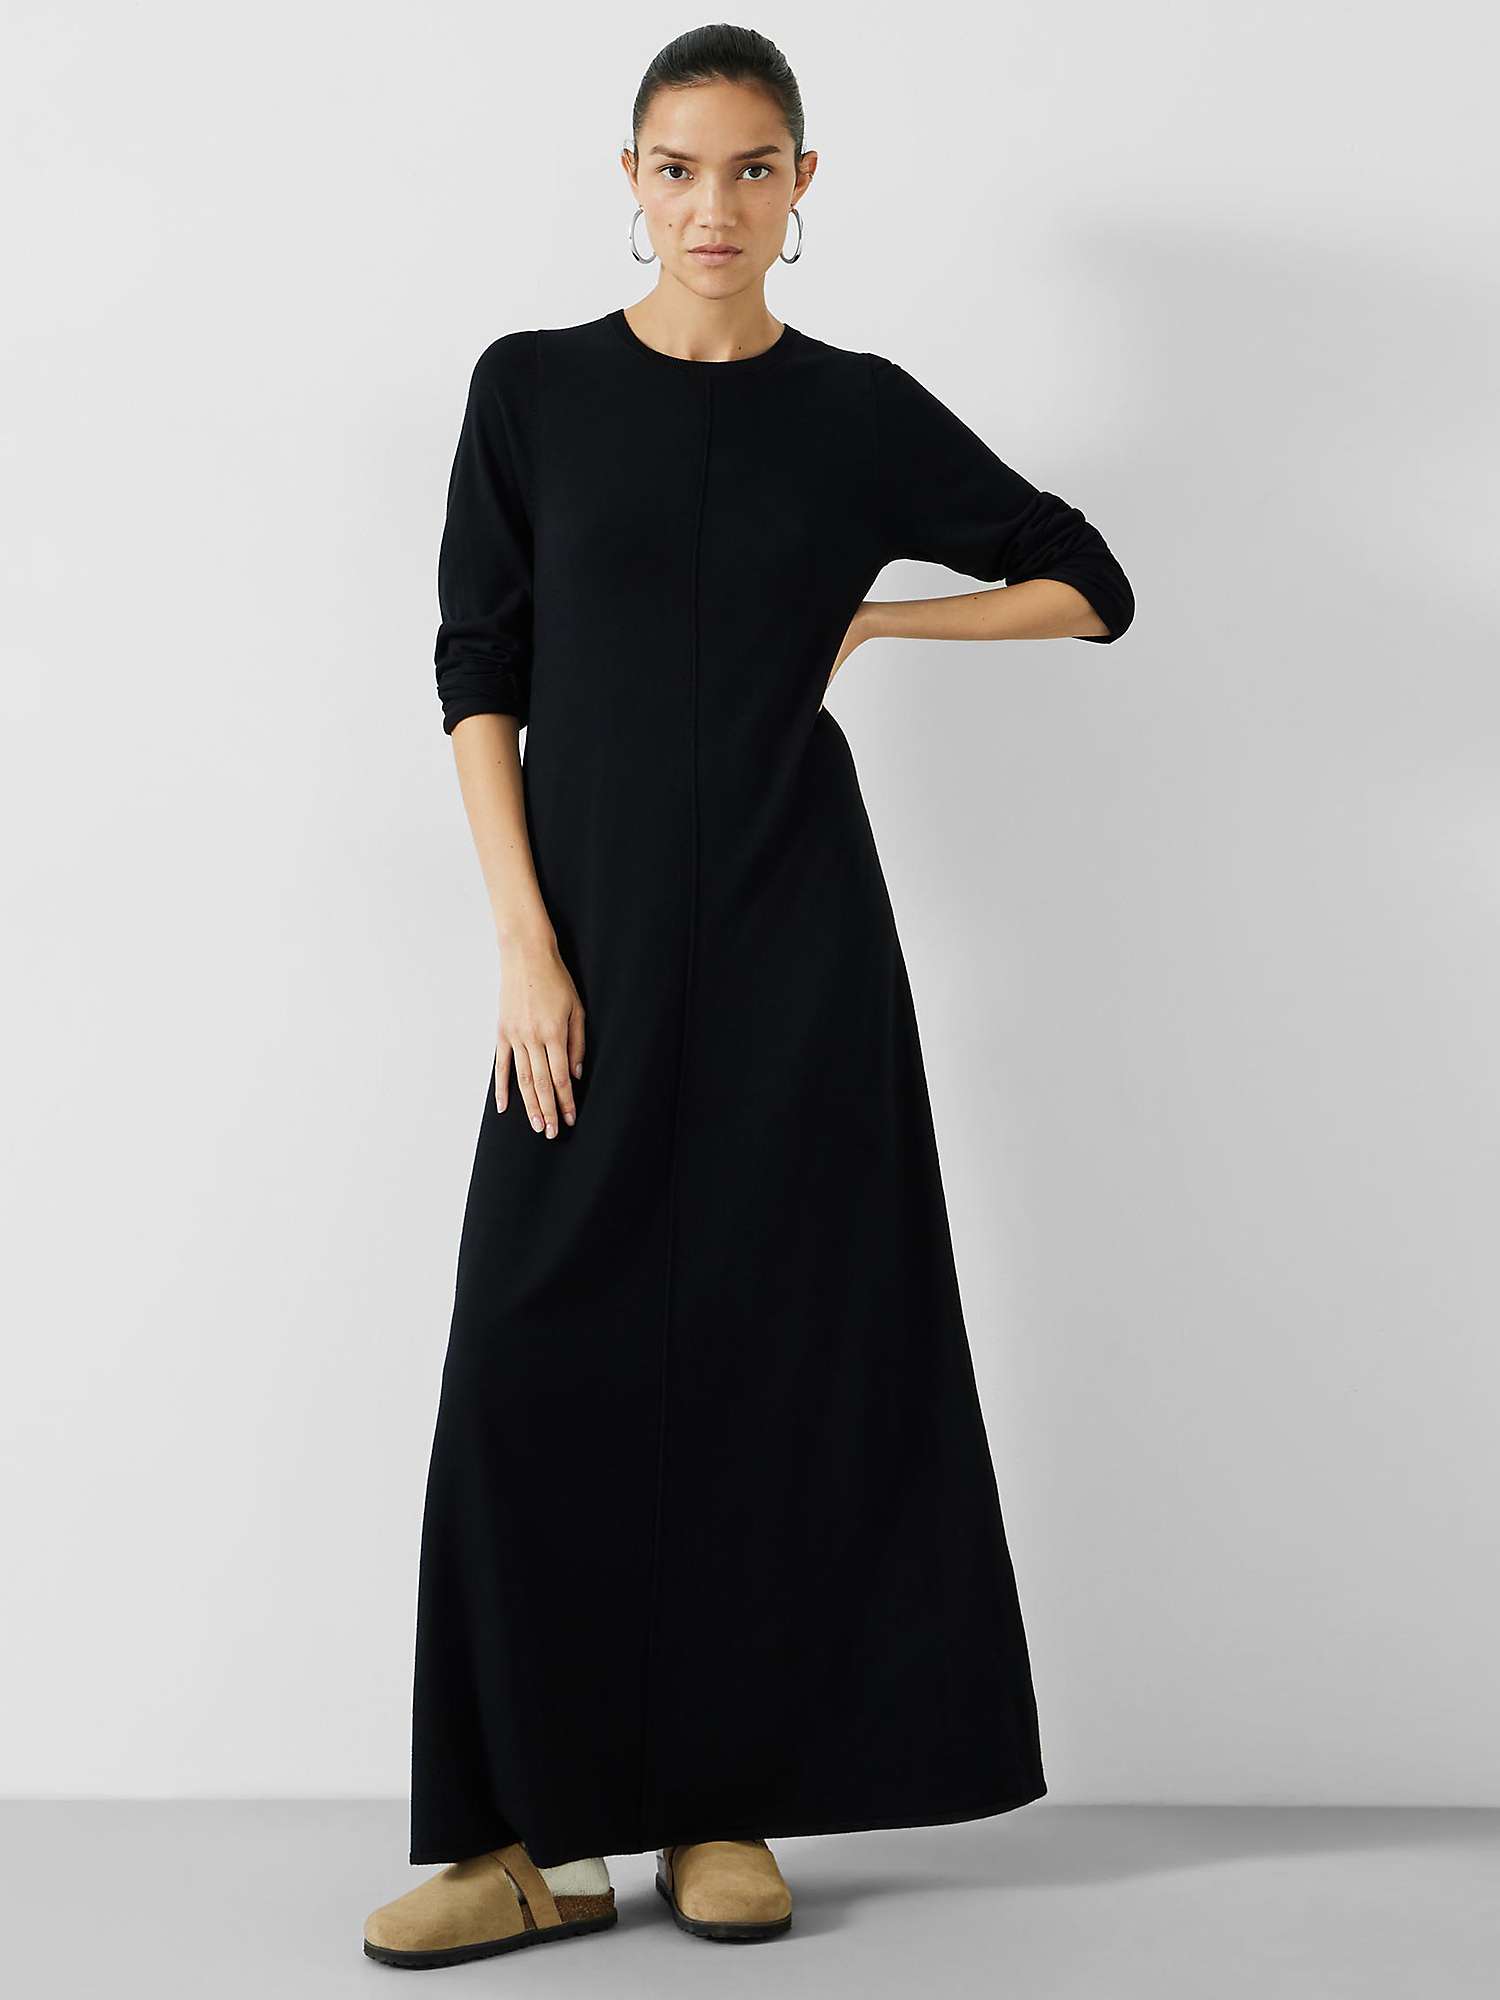 HUSH Talen Crew Knitted Dress, Black at John Lewis & Partners